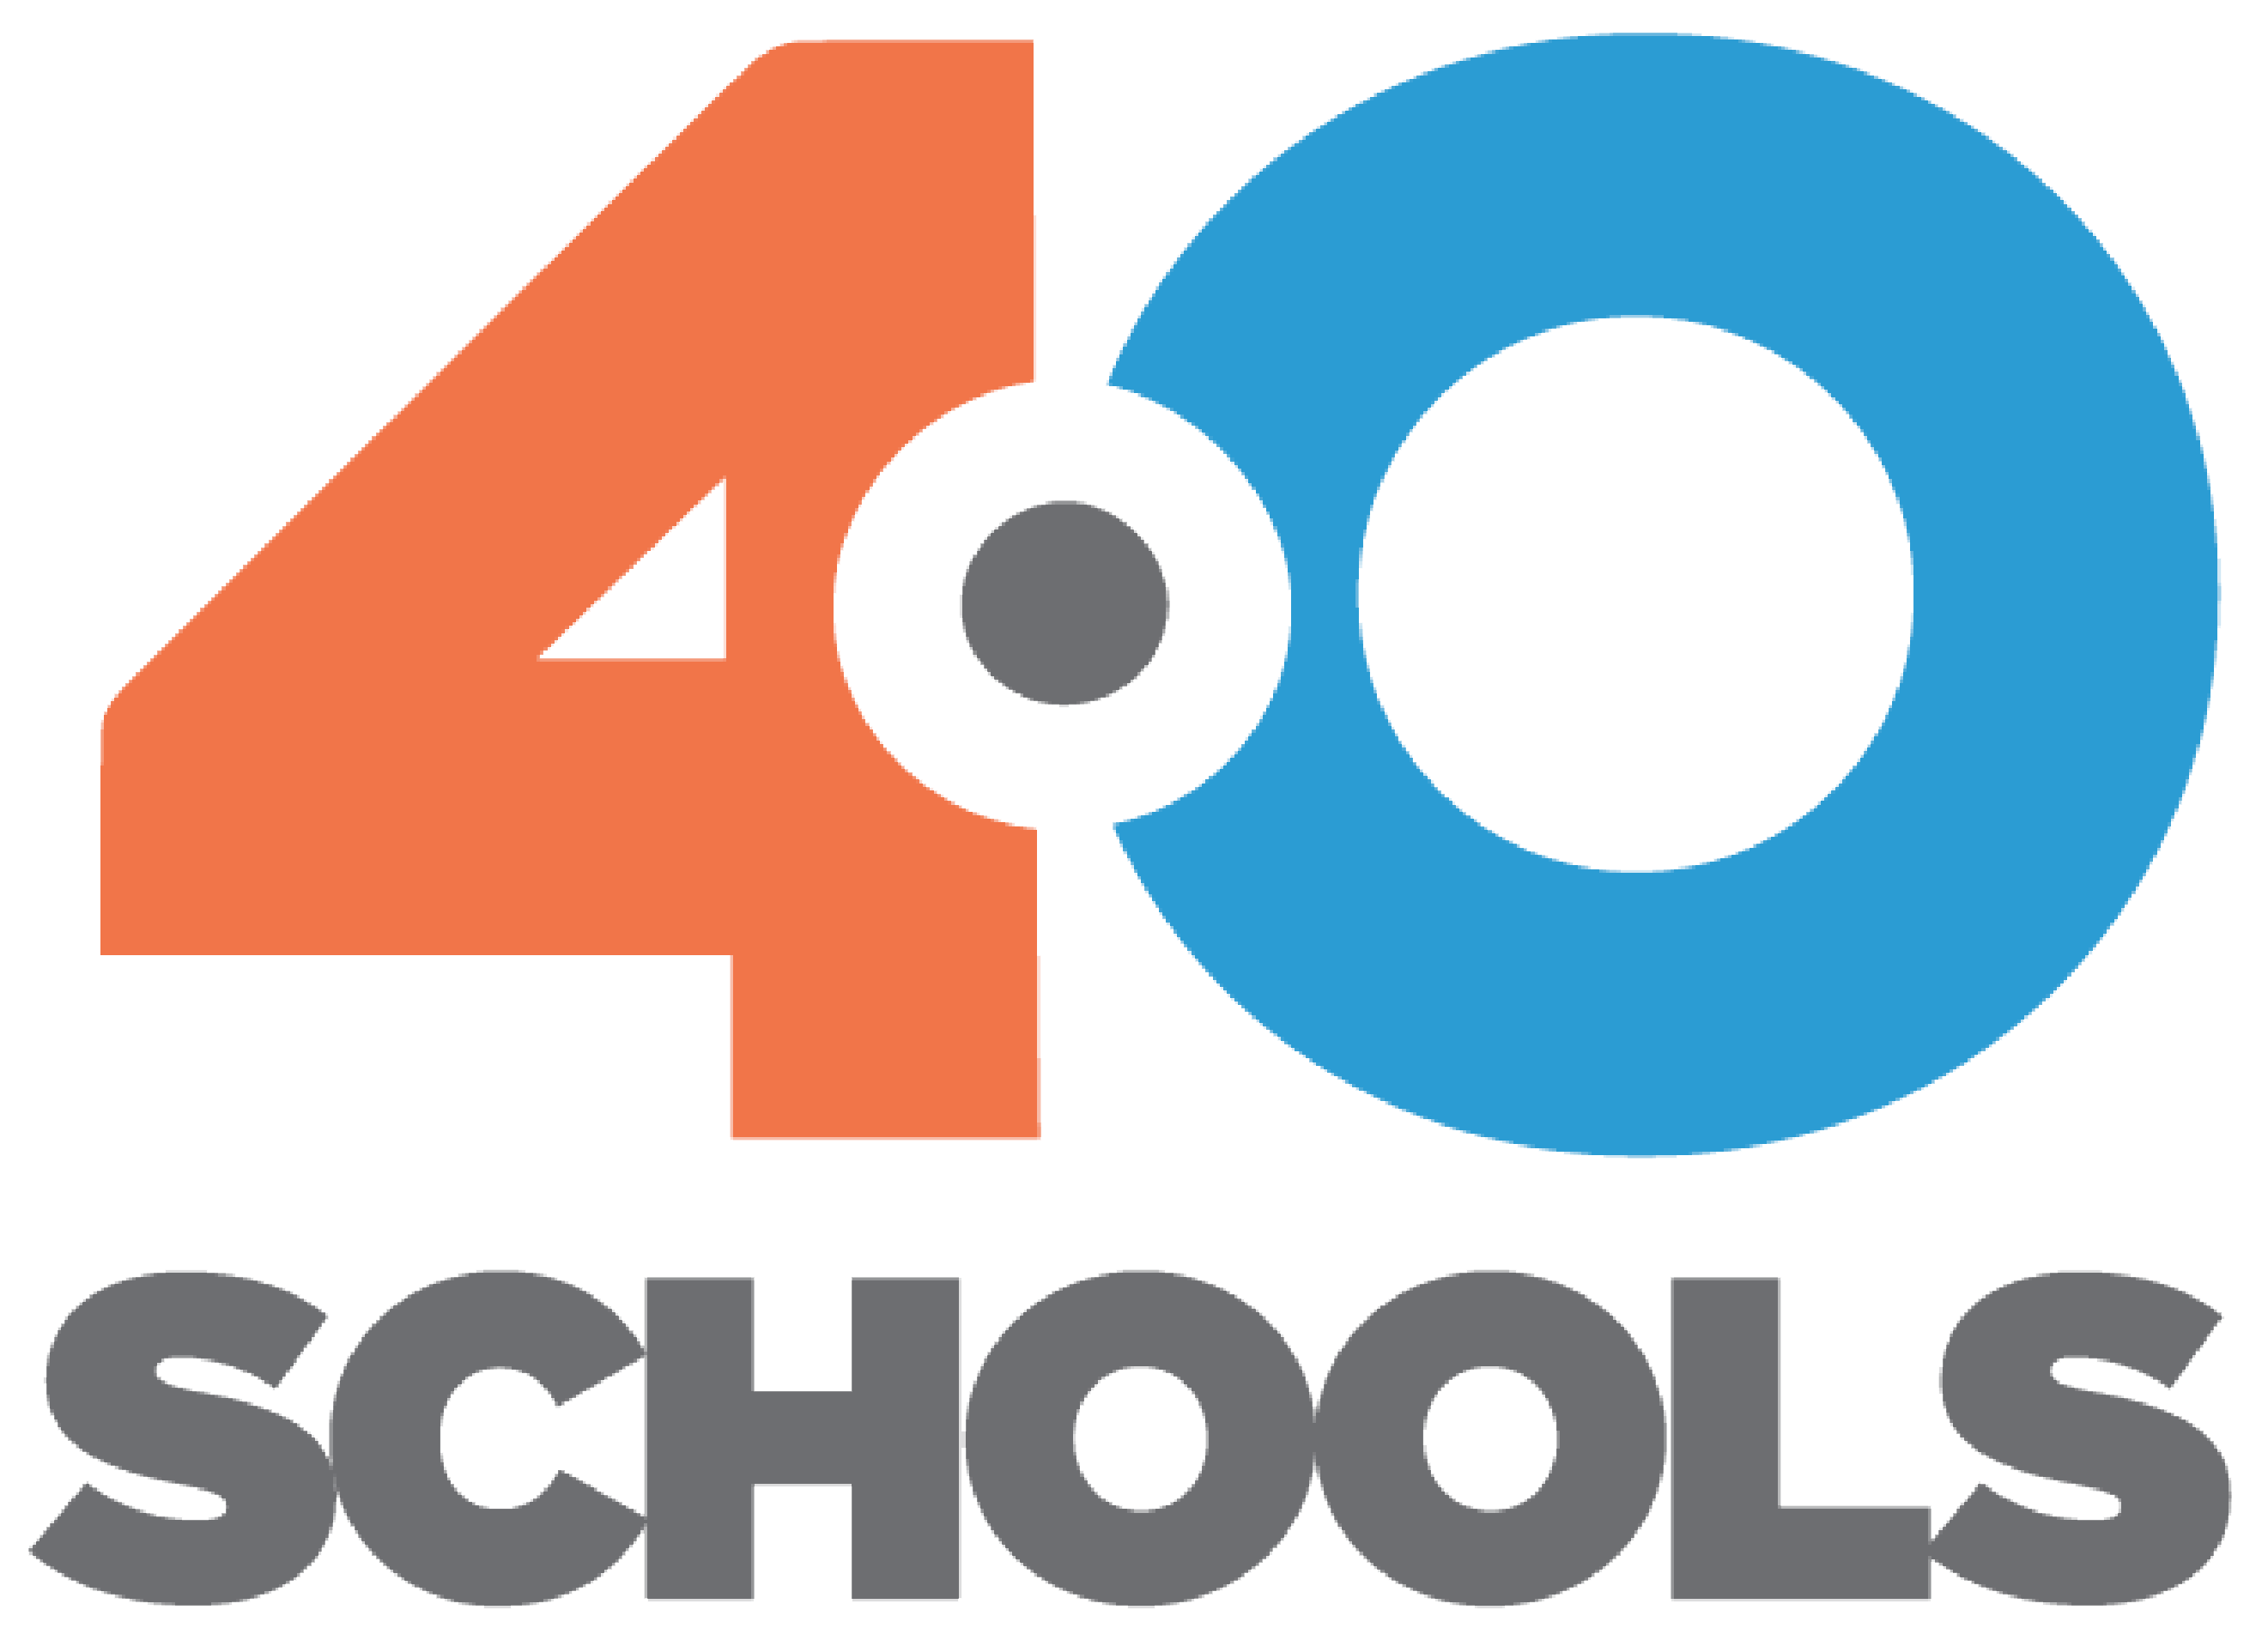 Connect | 4.0 Schools